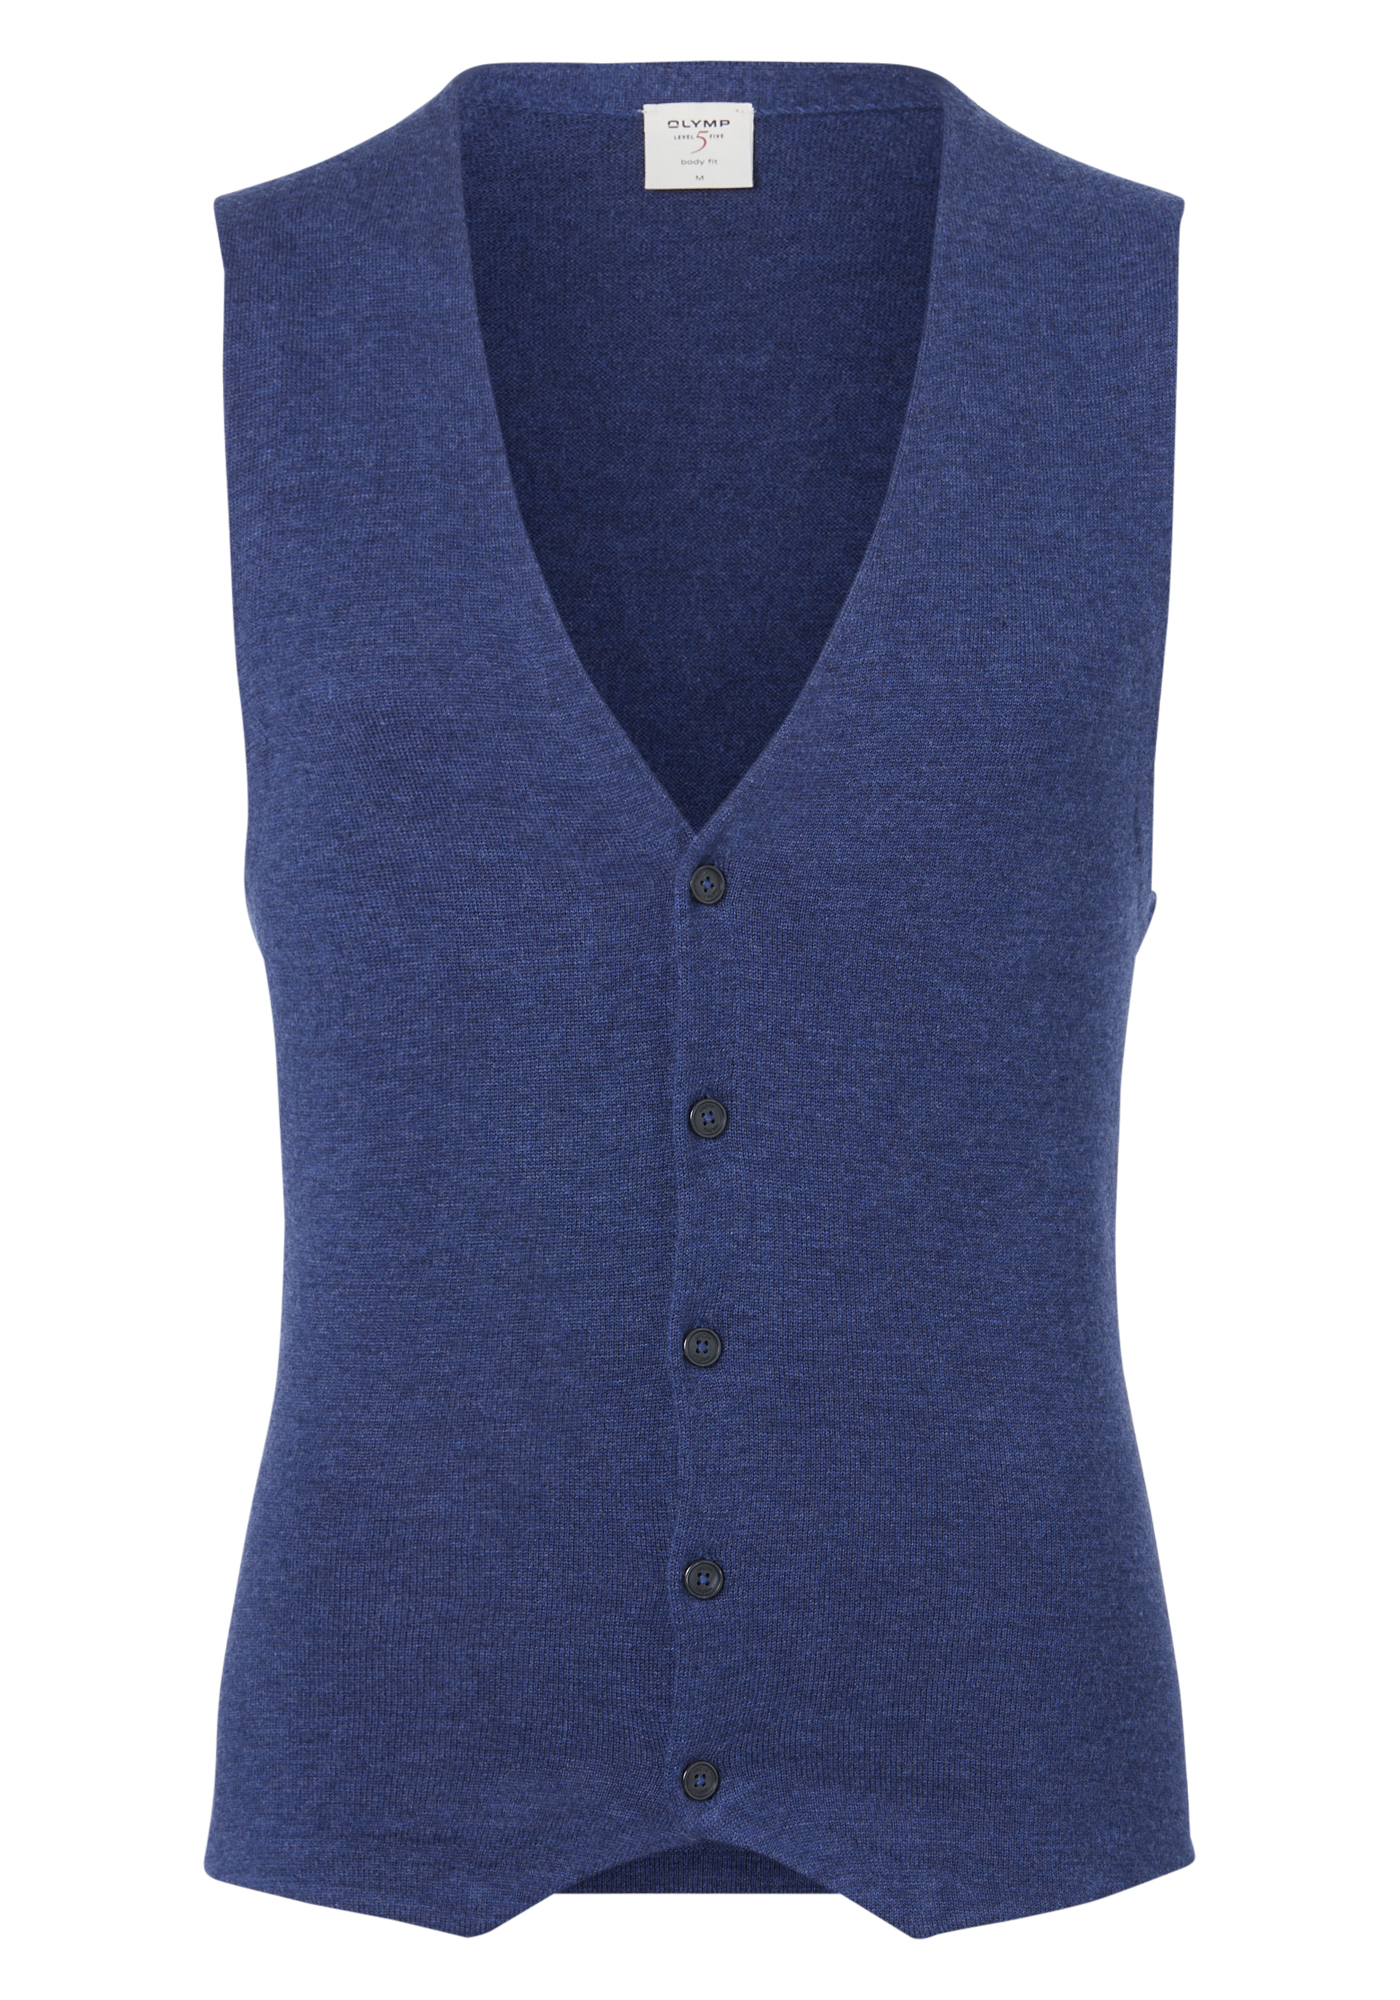 OLYMP Level 5 fit gilet, wol zijde, jeans blauw vest - Zomer tot 70% korting